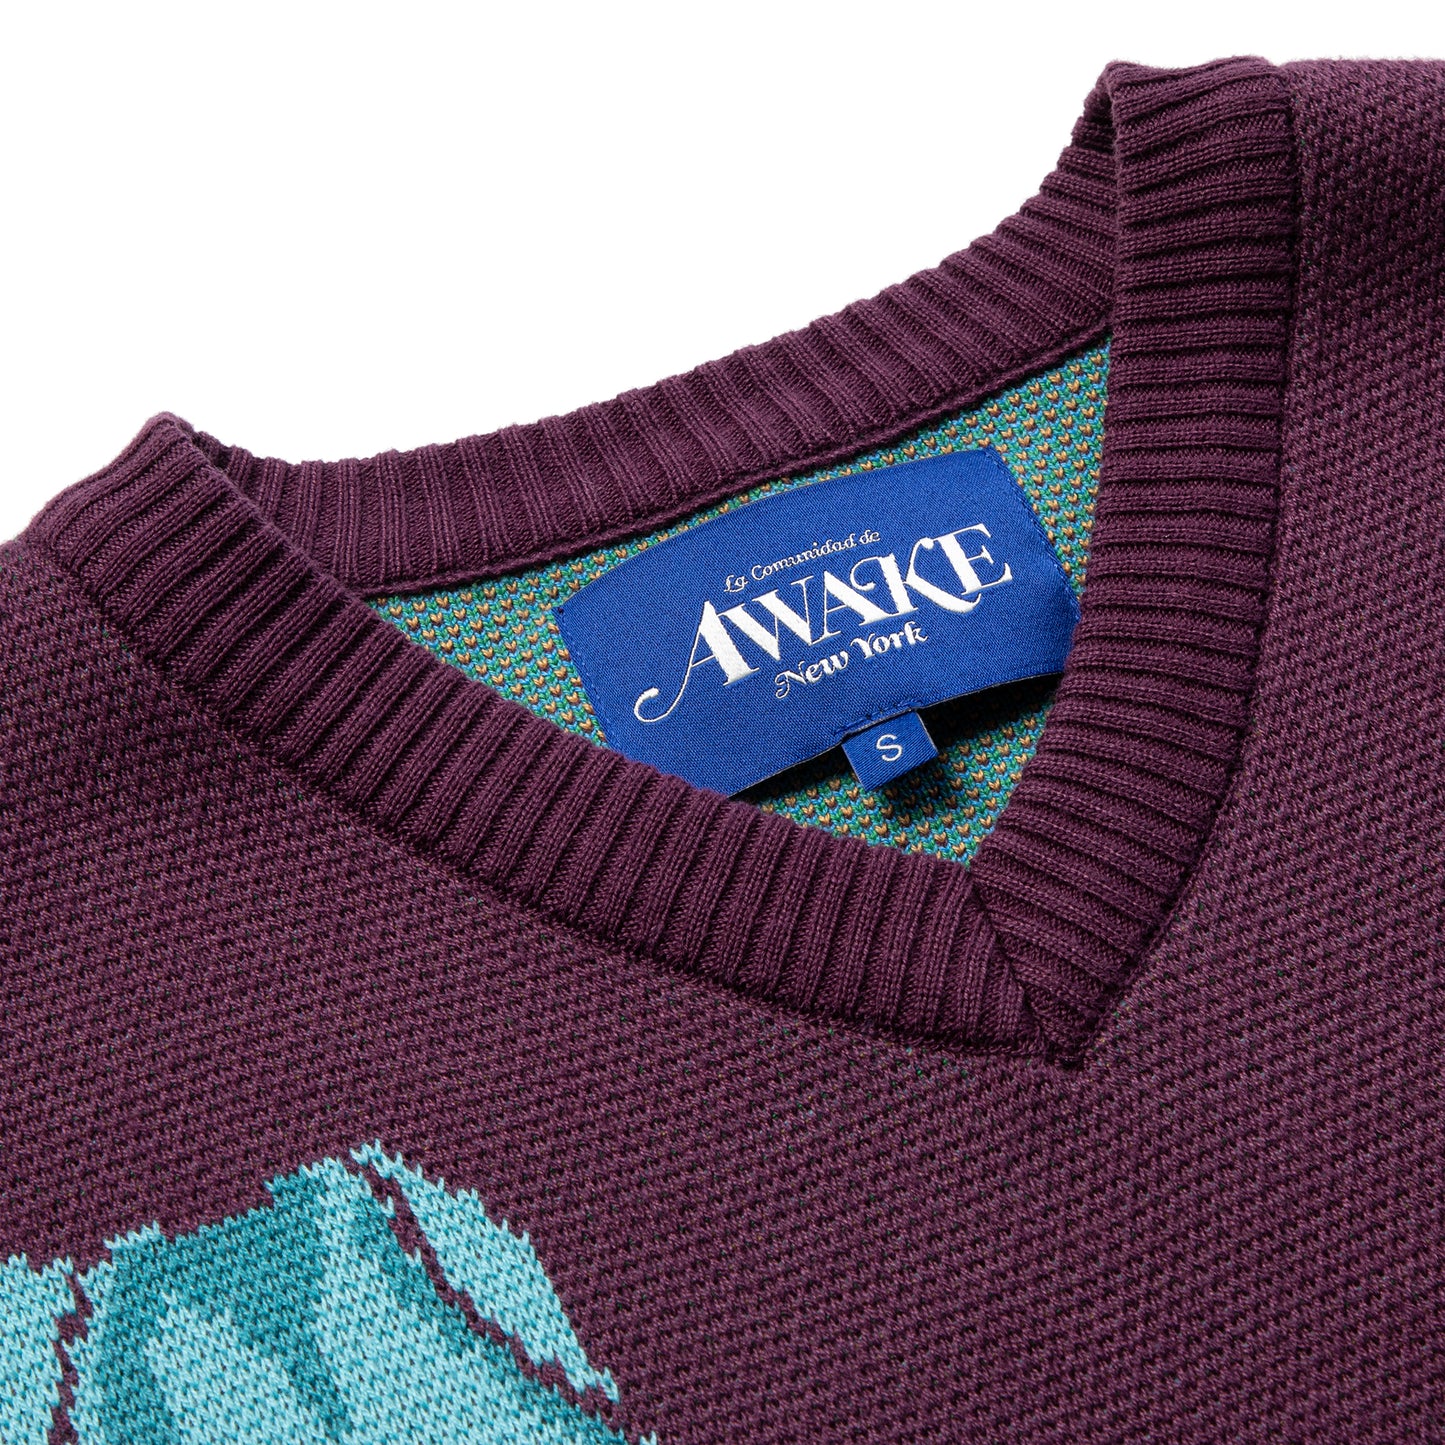 AWAKE Floral Sweater Vest (Magenta)